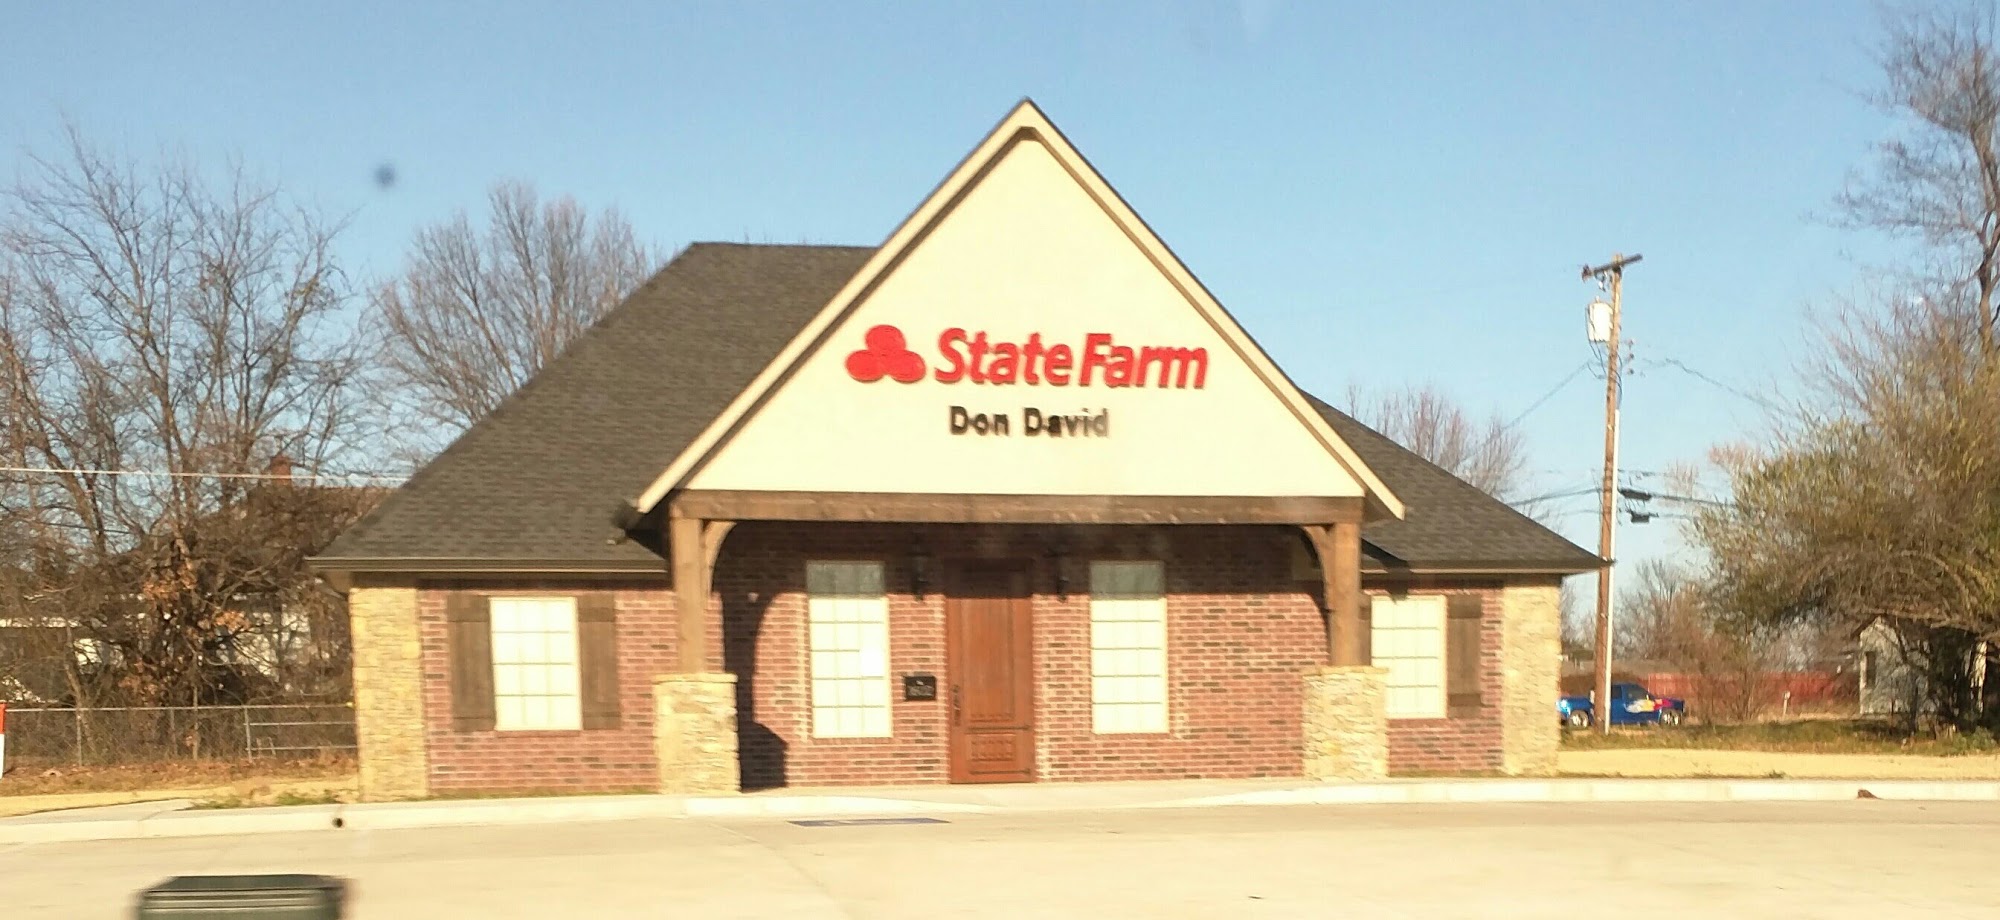 Don David - State Farm Insurance Agent